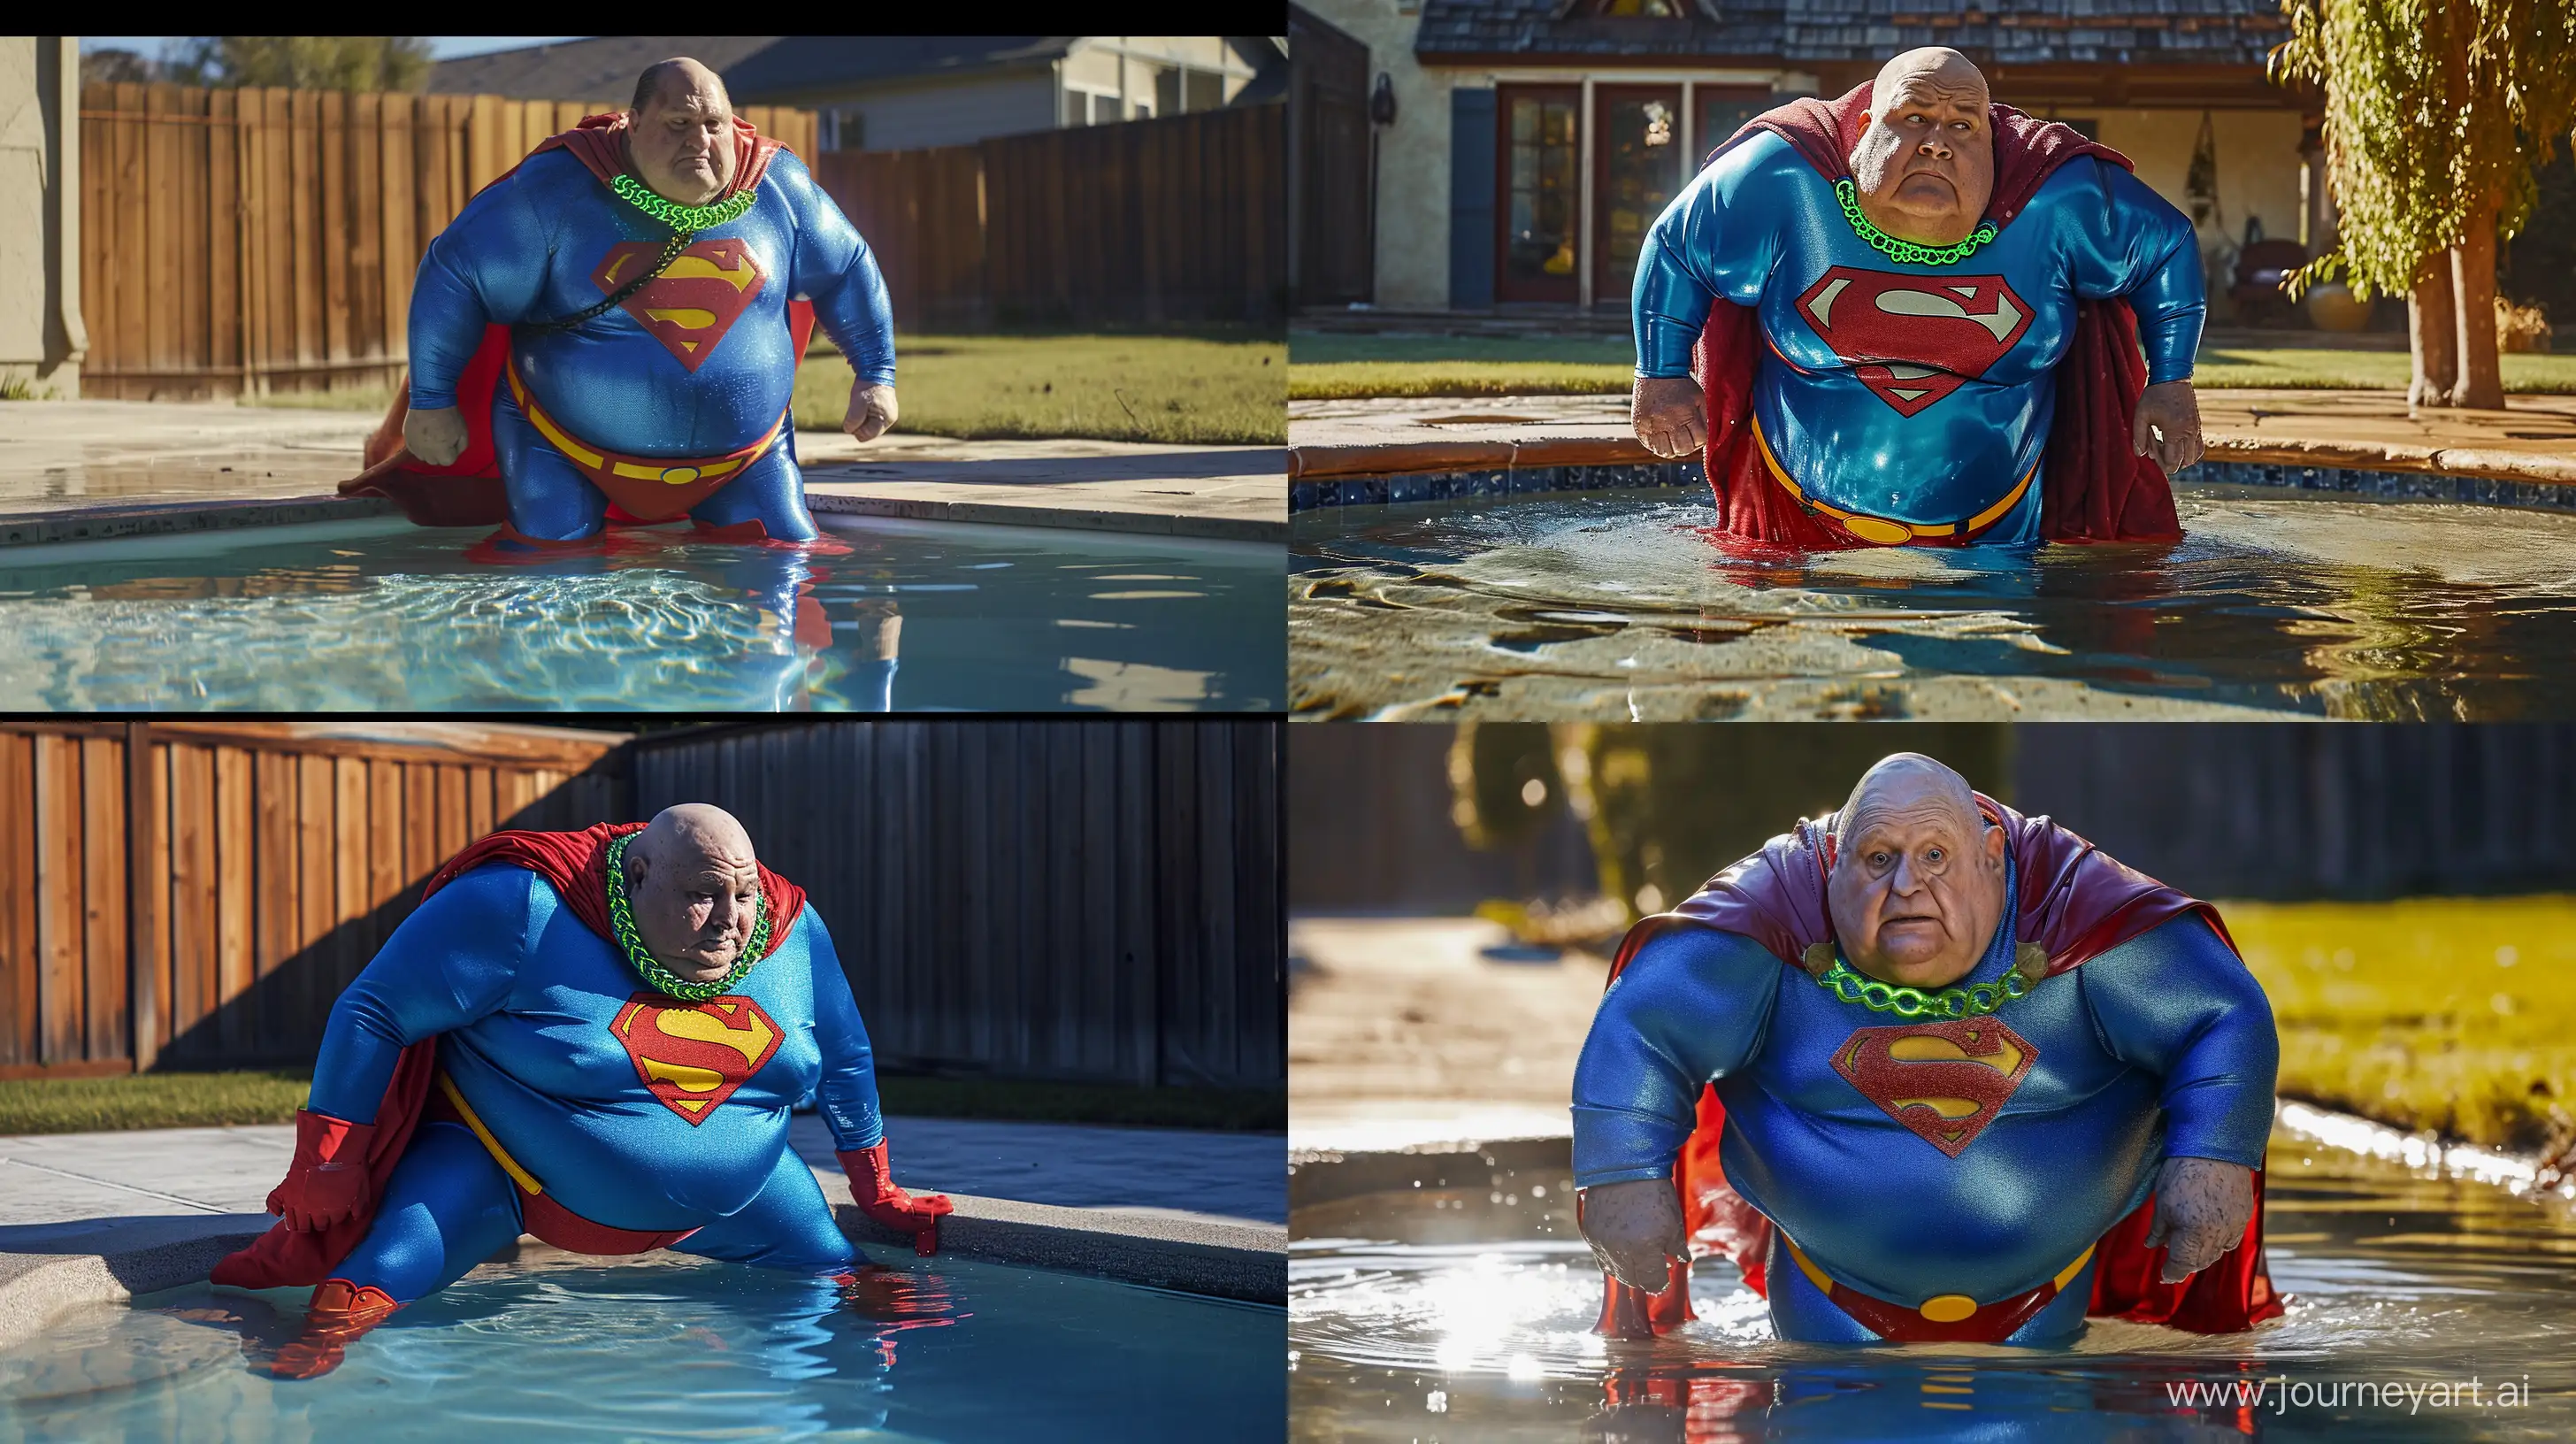 Elderly-Superman-Enjoys-Playful-Water-Adventure-in-Vibrant-Costume